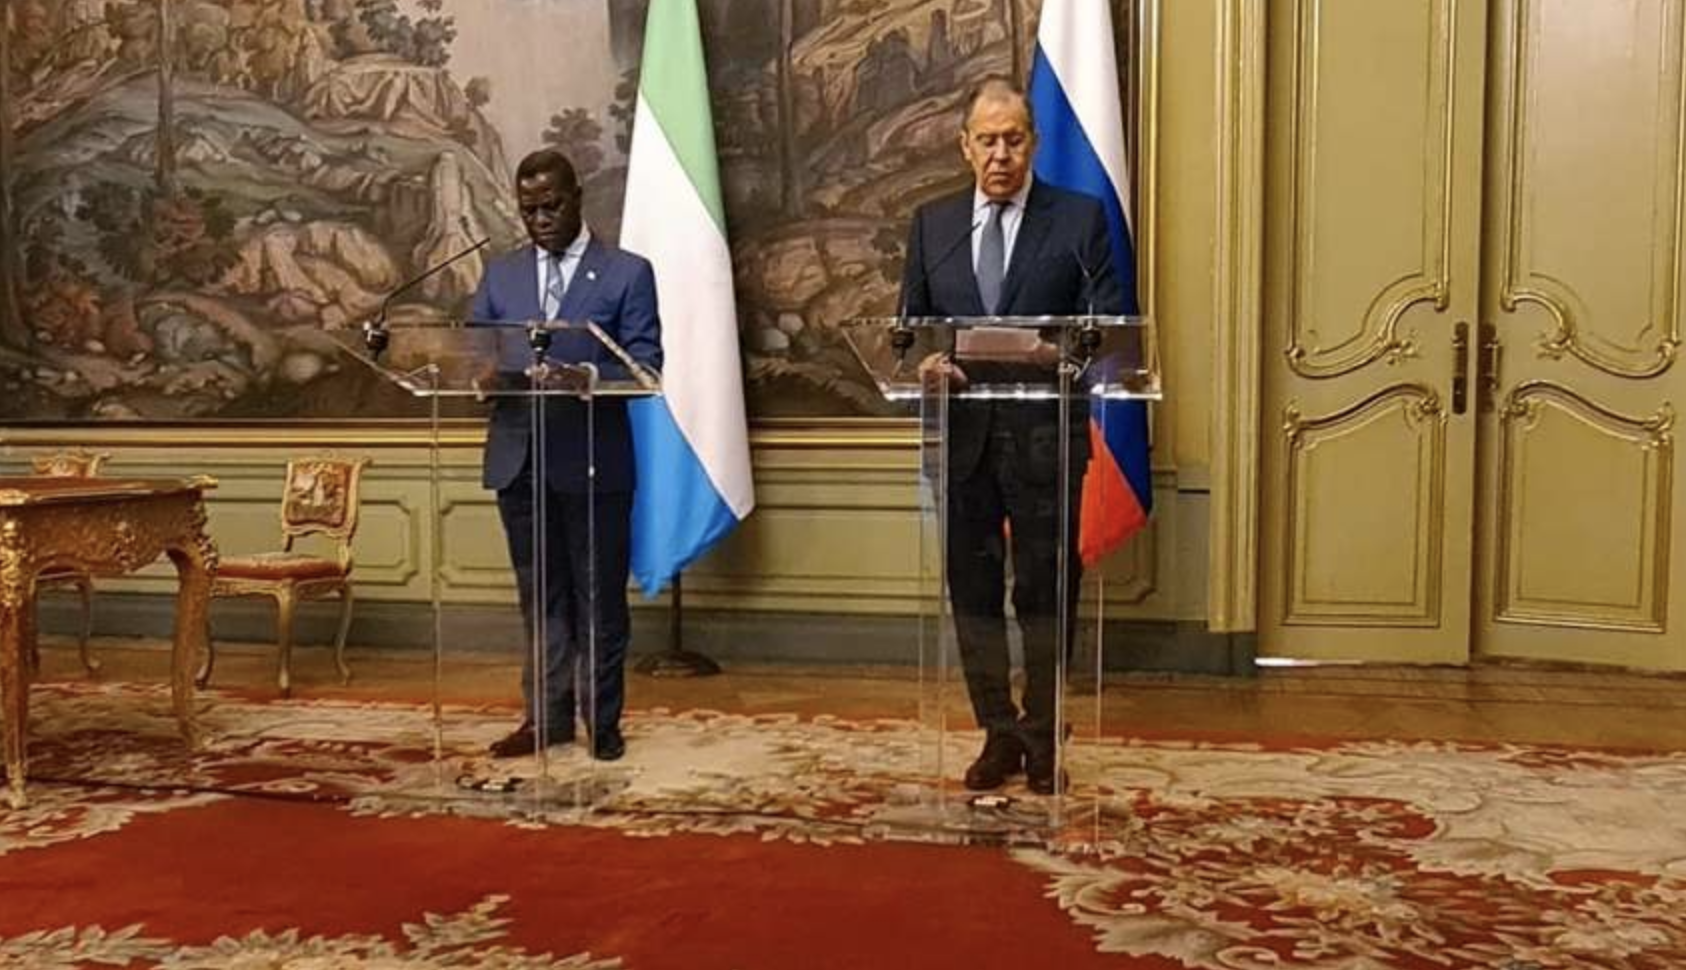 Russia to open embassy in Sierra Leone by year’s end